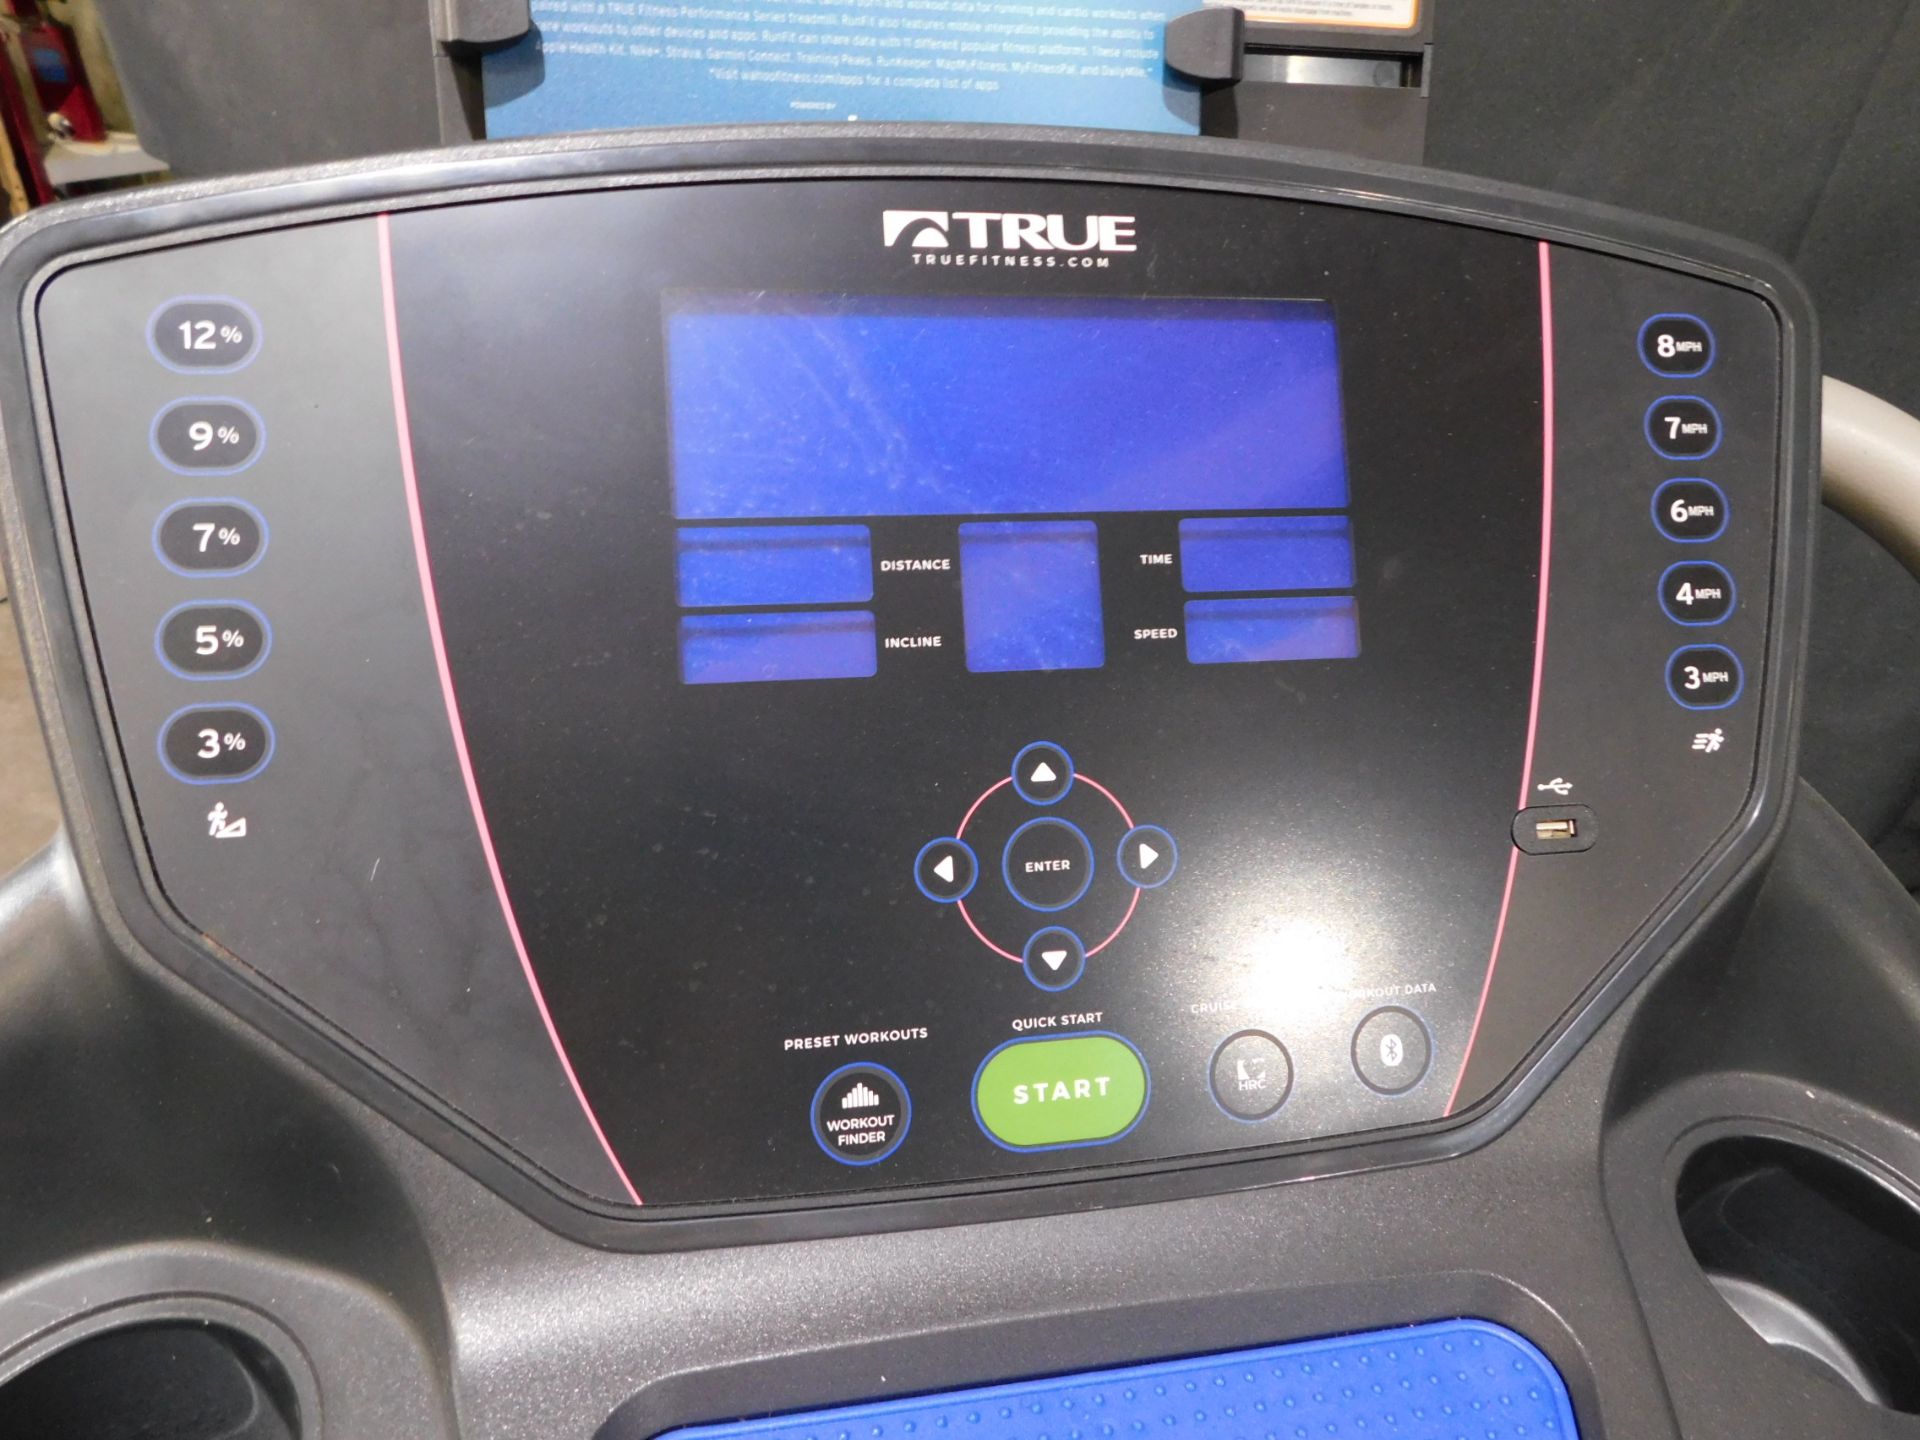 True Performance 300 Treadmill-Demonstrator Unit - Image 7 of 16